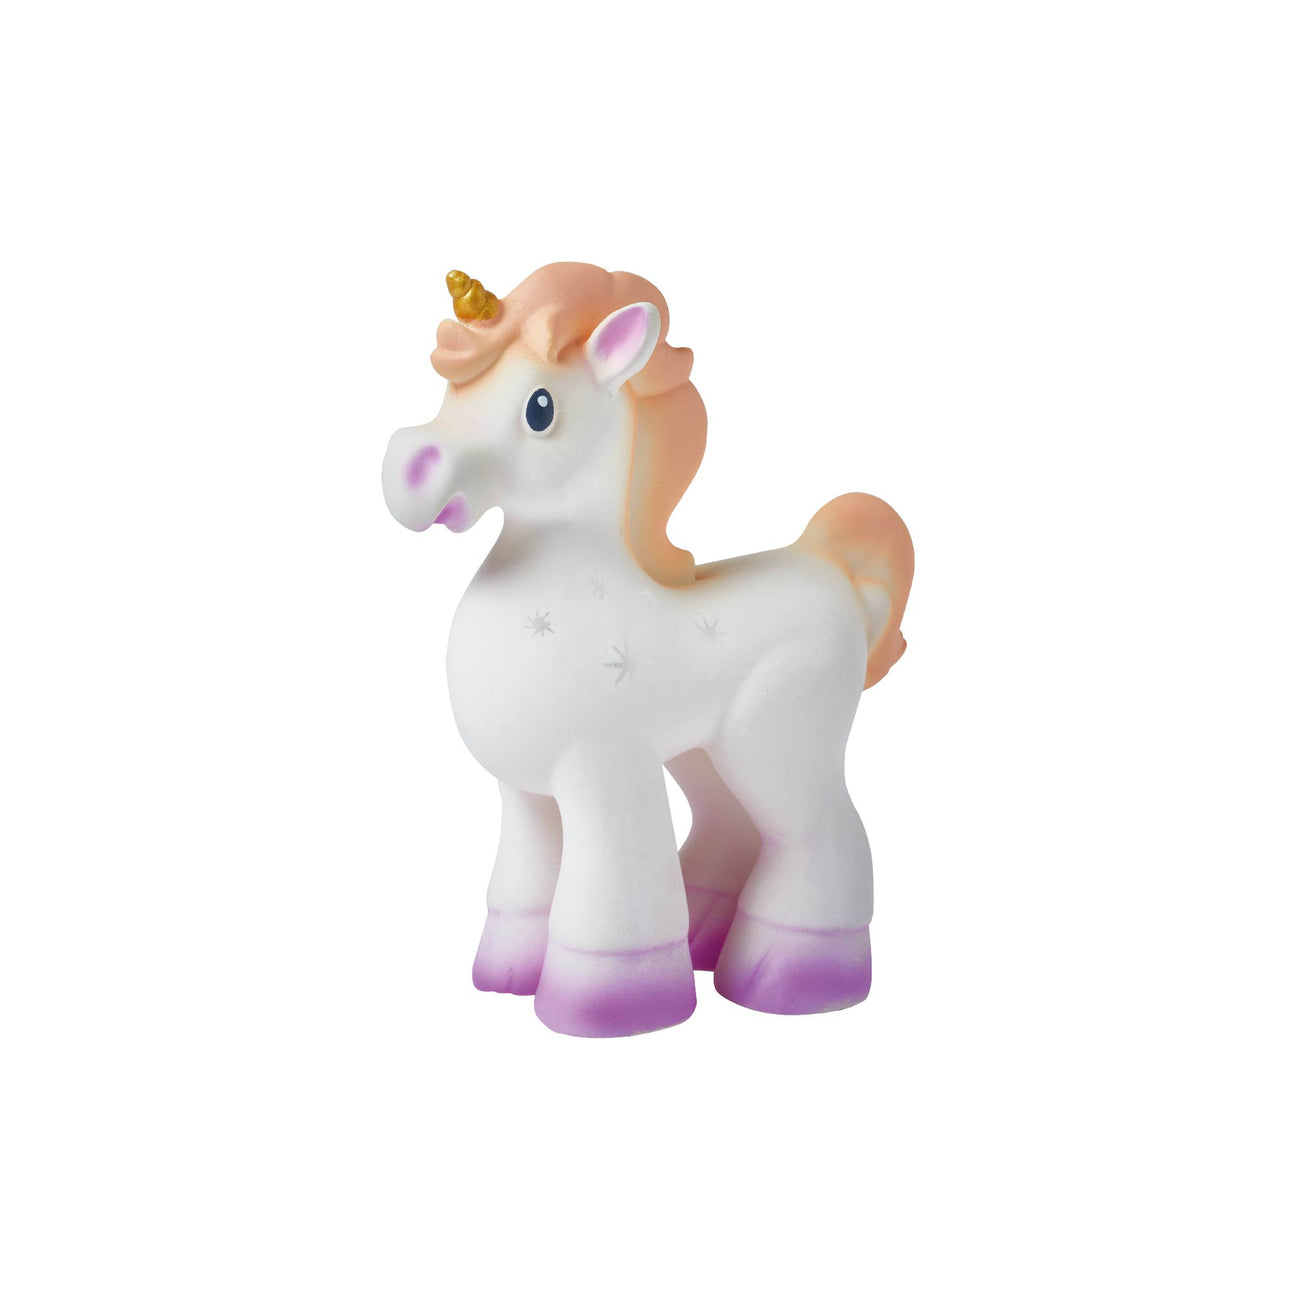 Luna The Unicorn Teething Toy